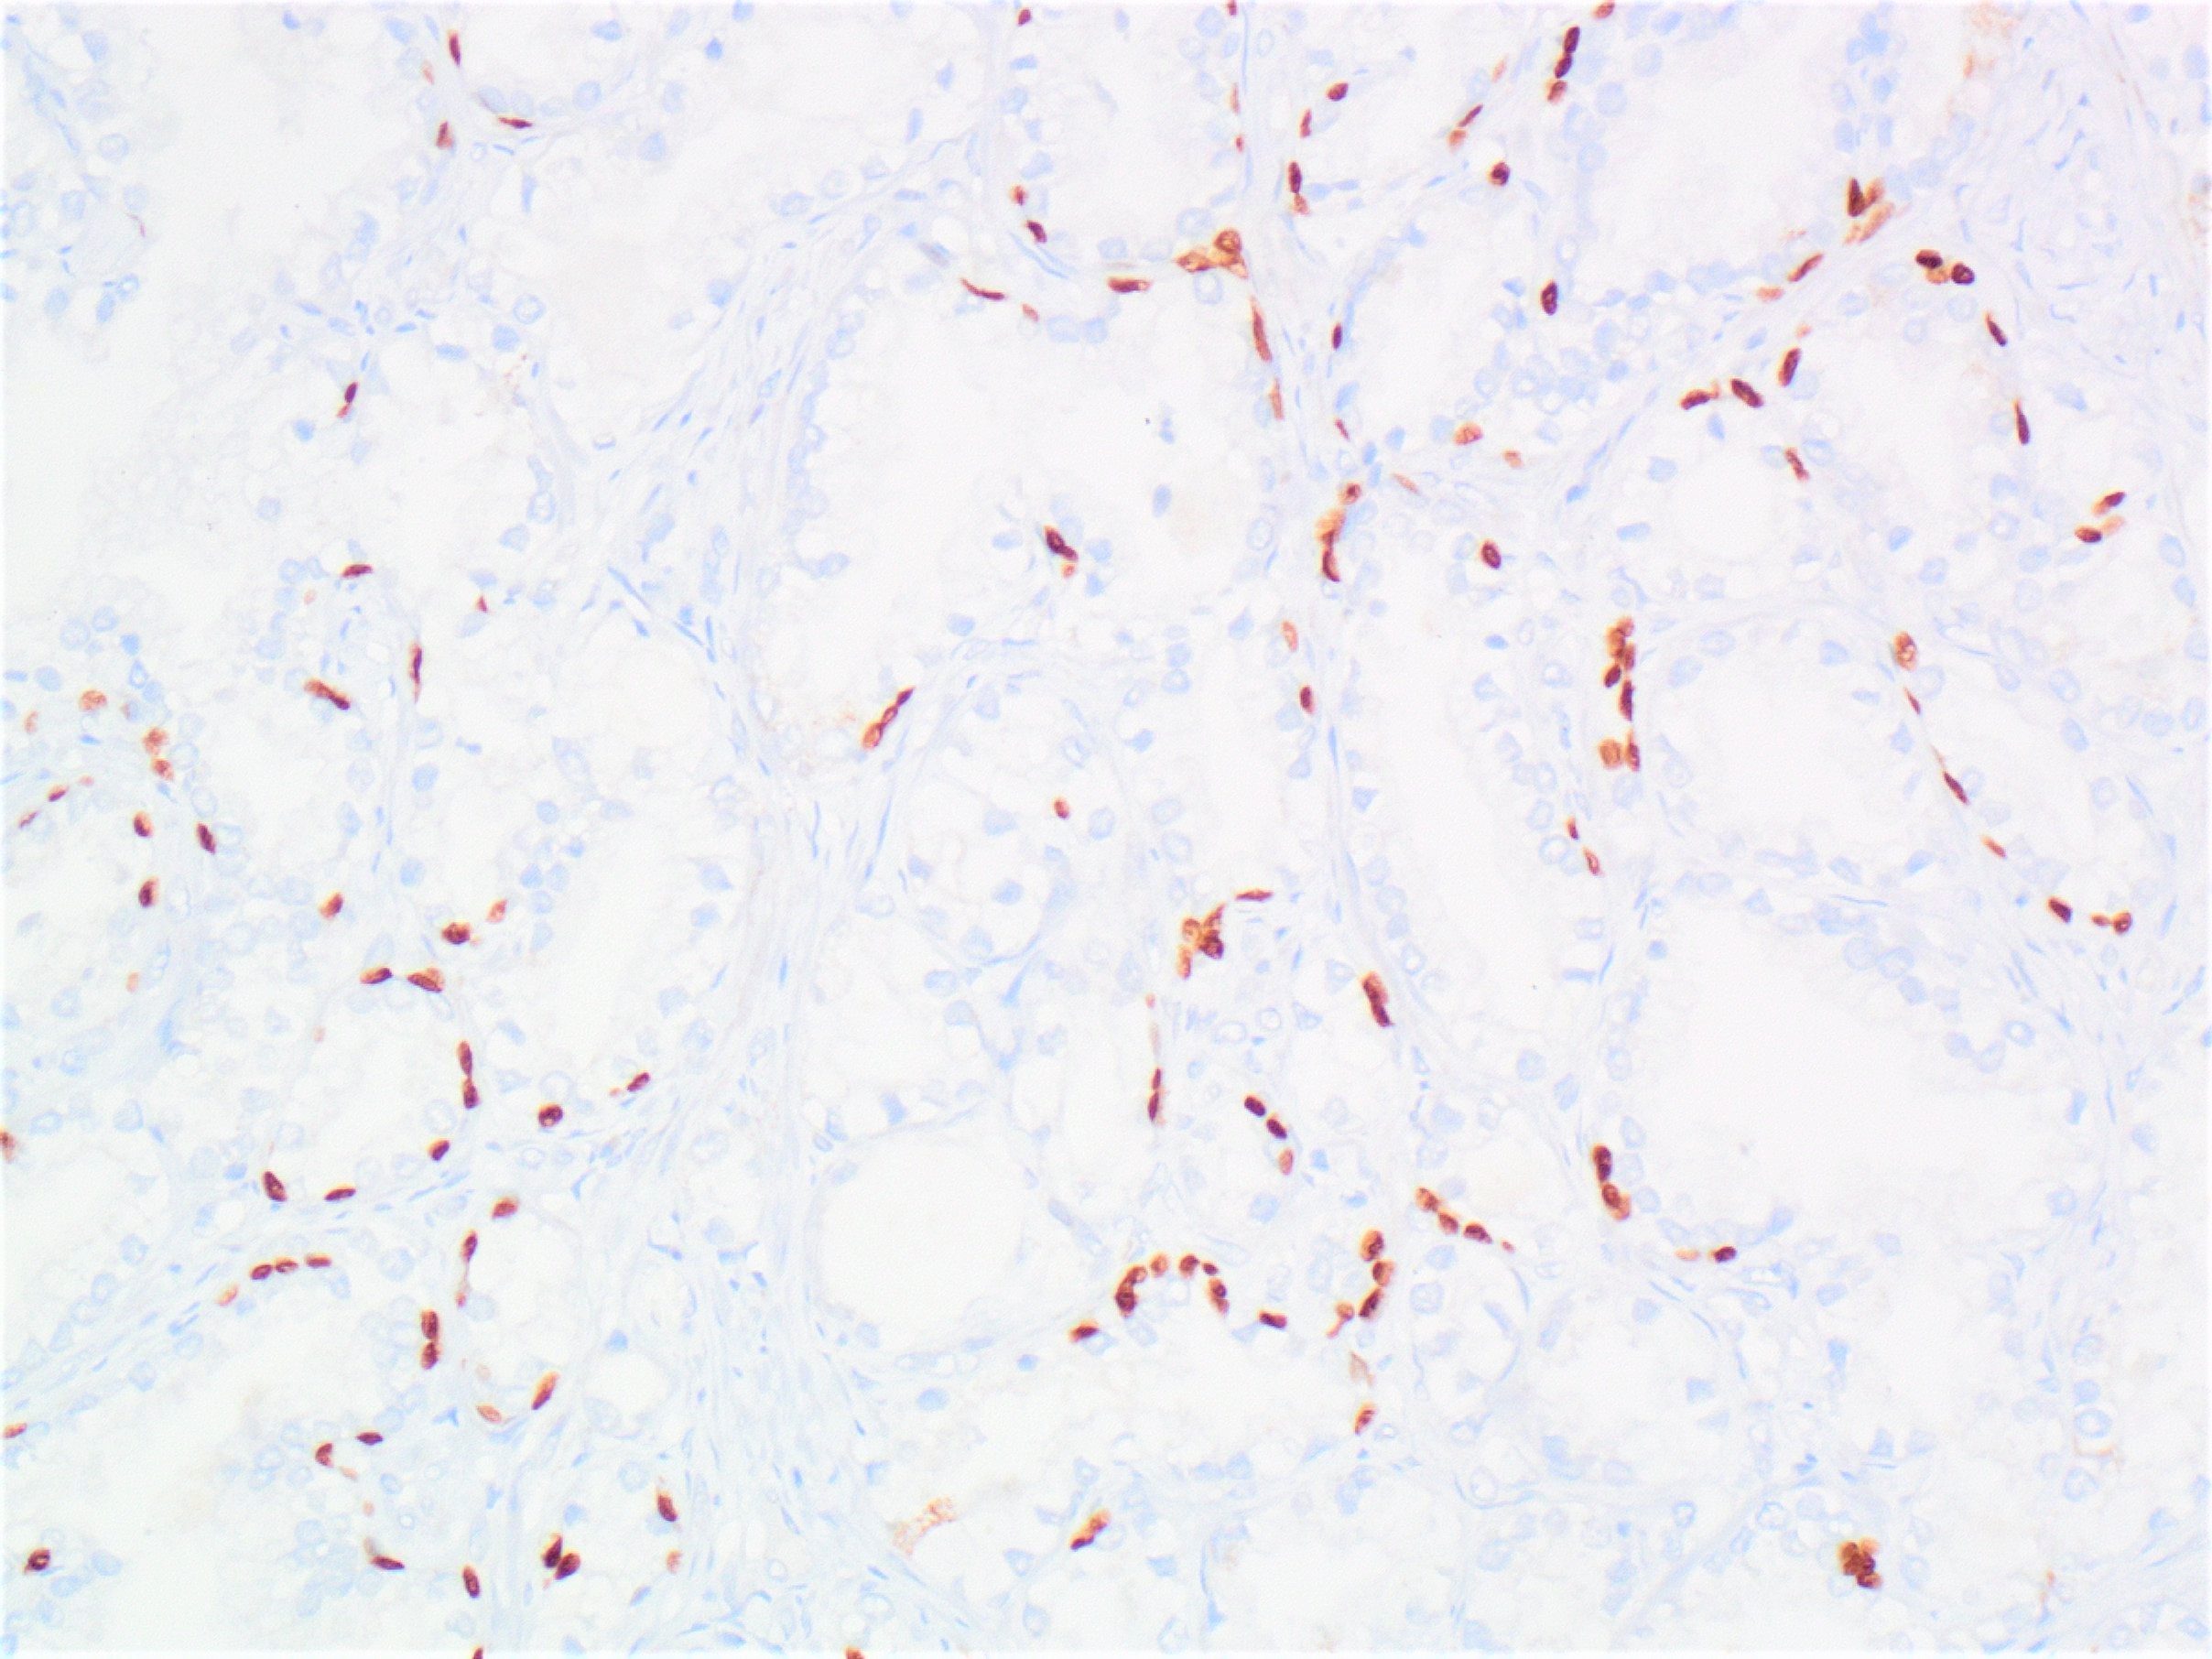 Fragmented basal cells